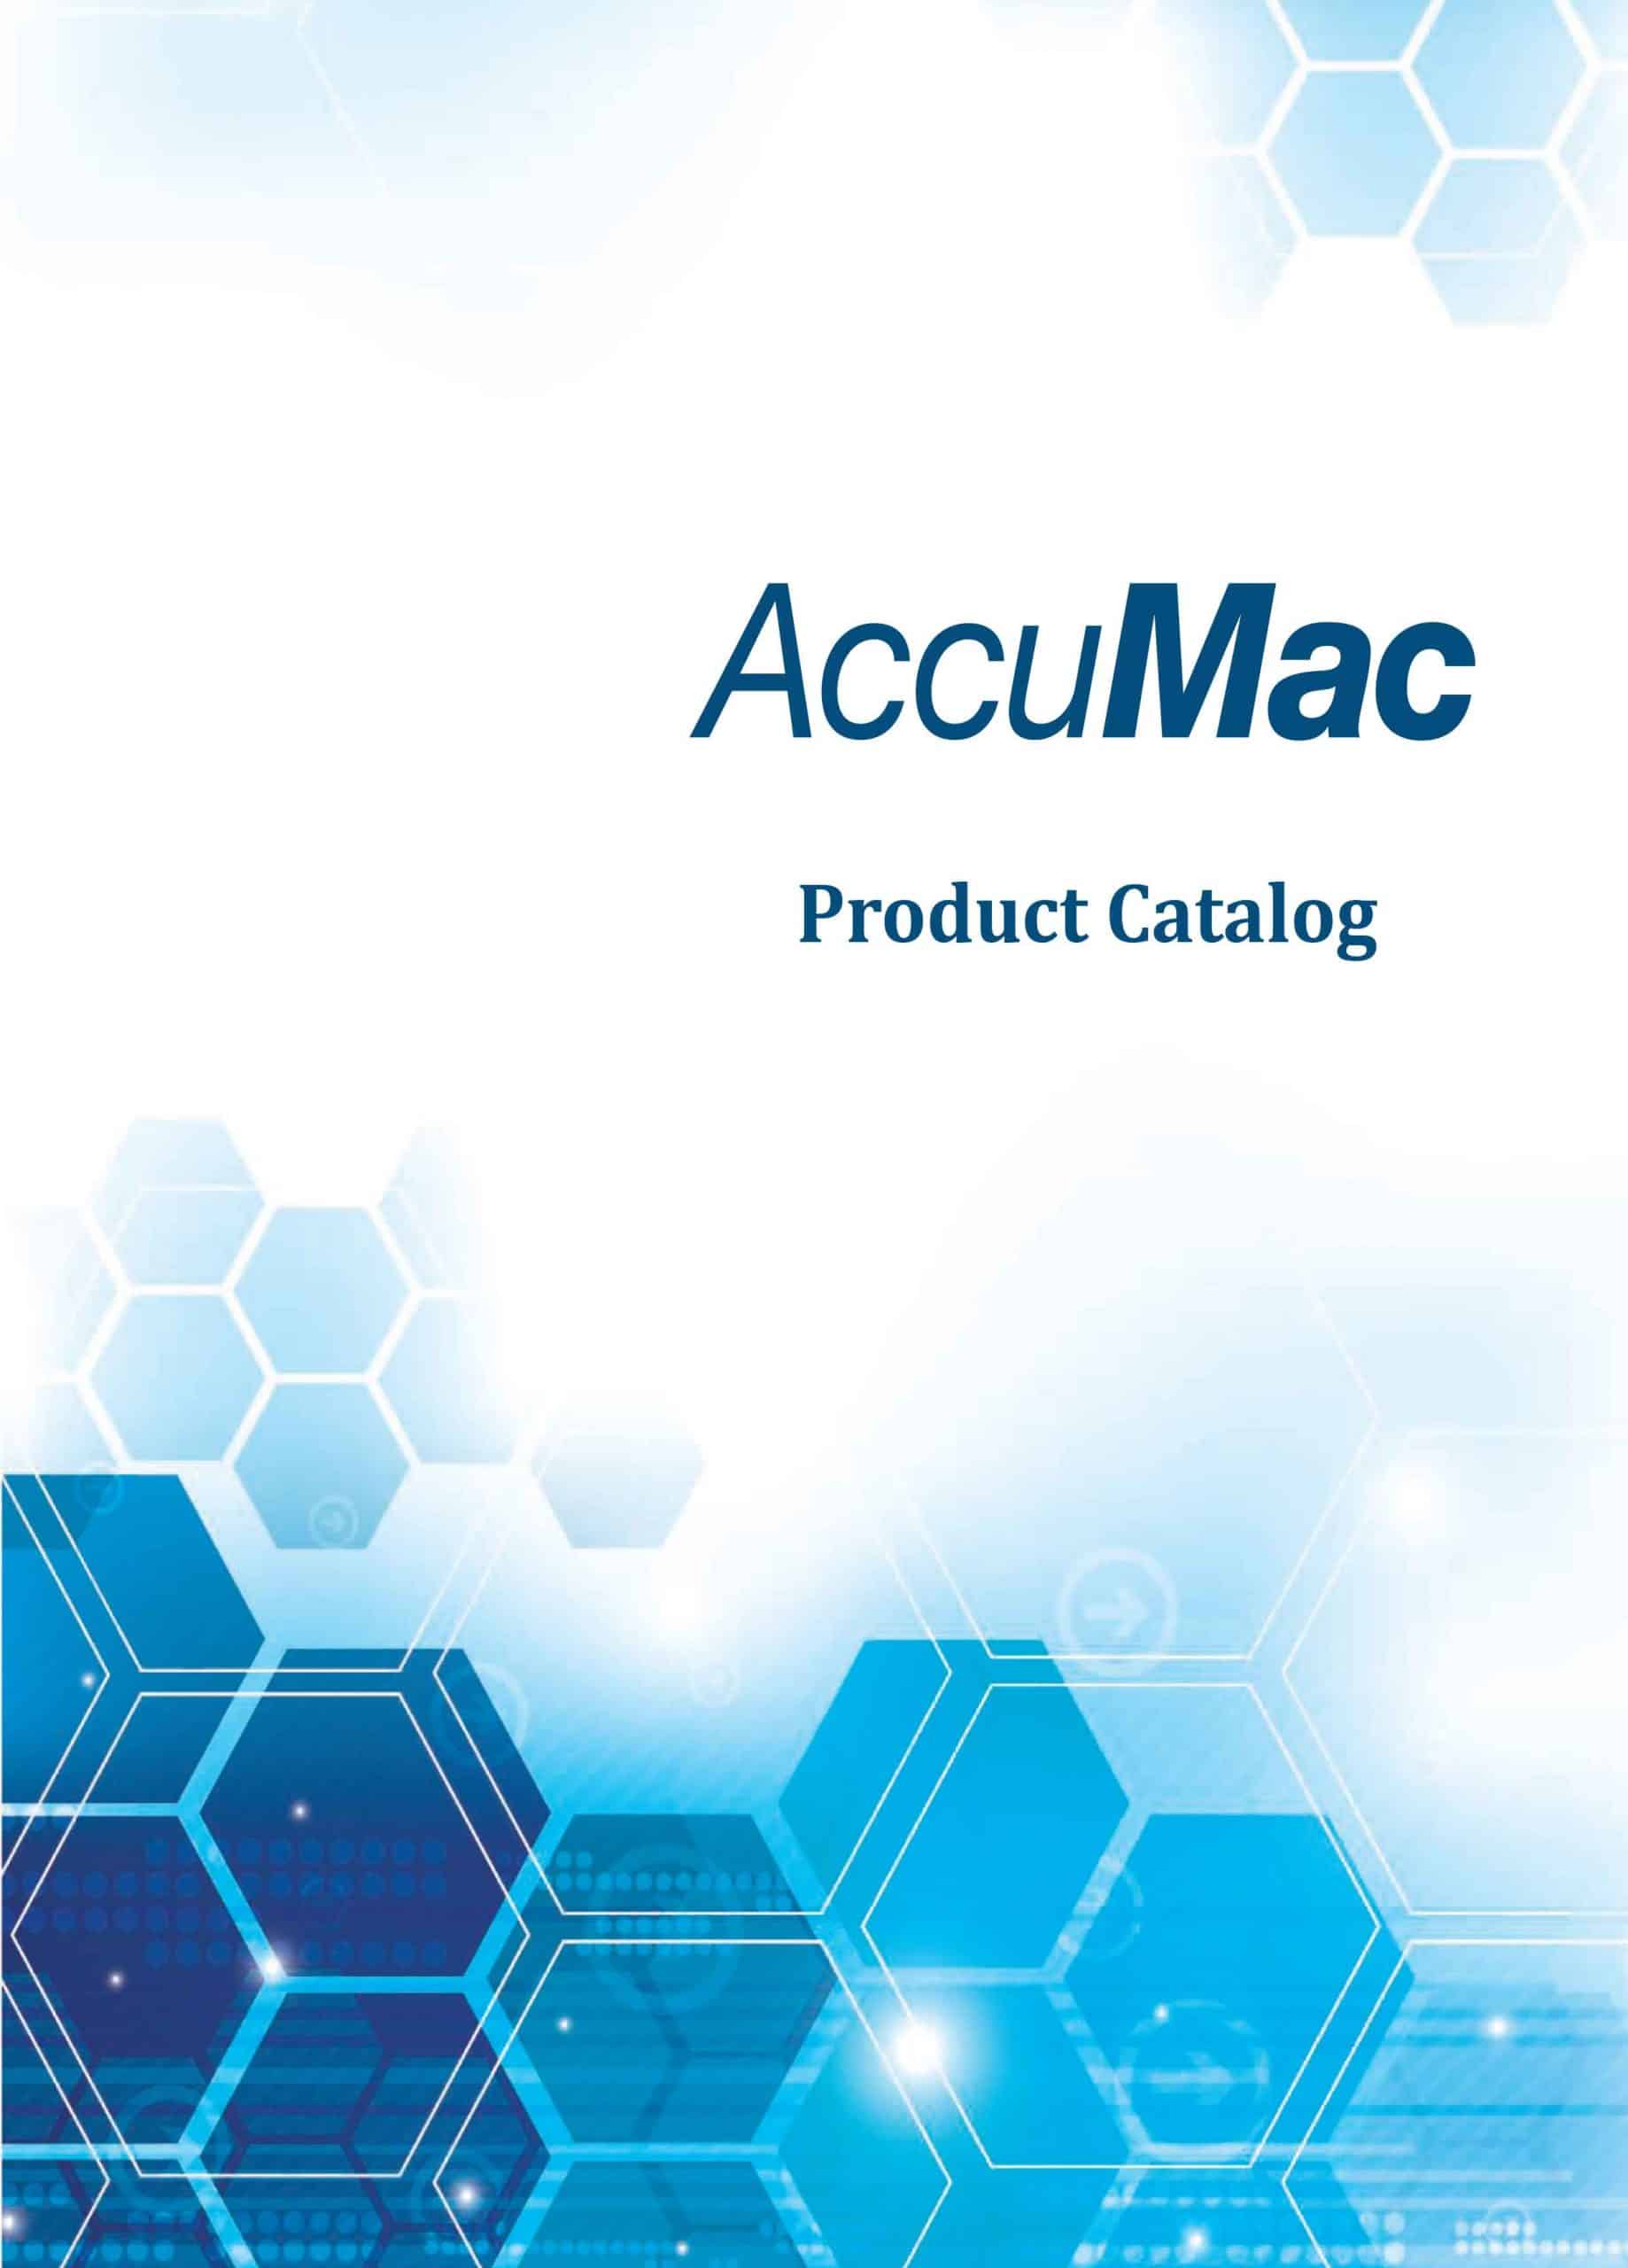 AccuMac catalog cover